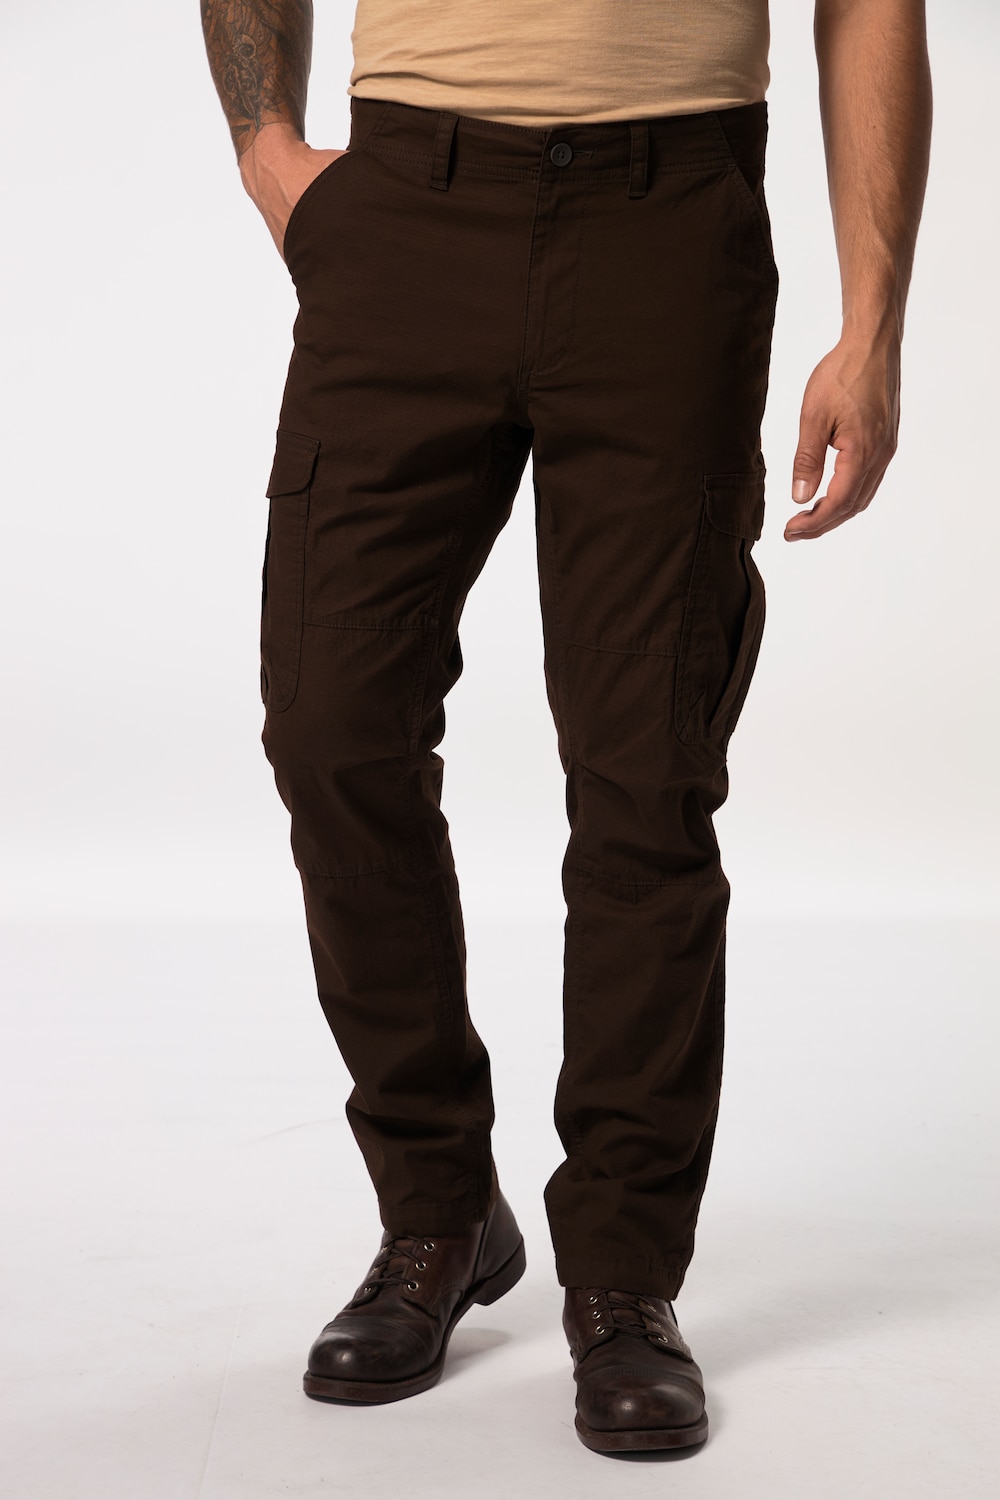 grandes tailles pantalon cargo flexnamic® en ripstop, hommes, marron, taille: 58, coton, jp1880